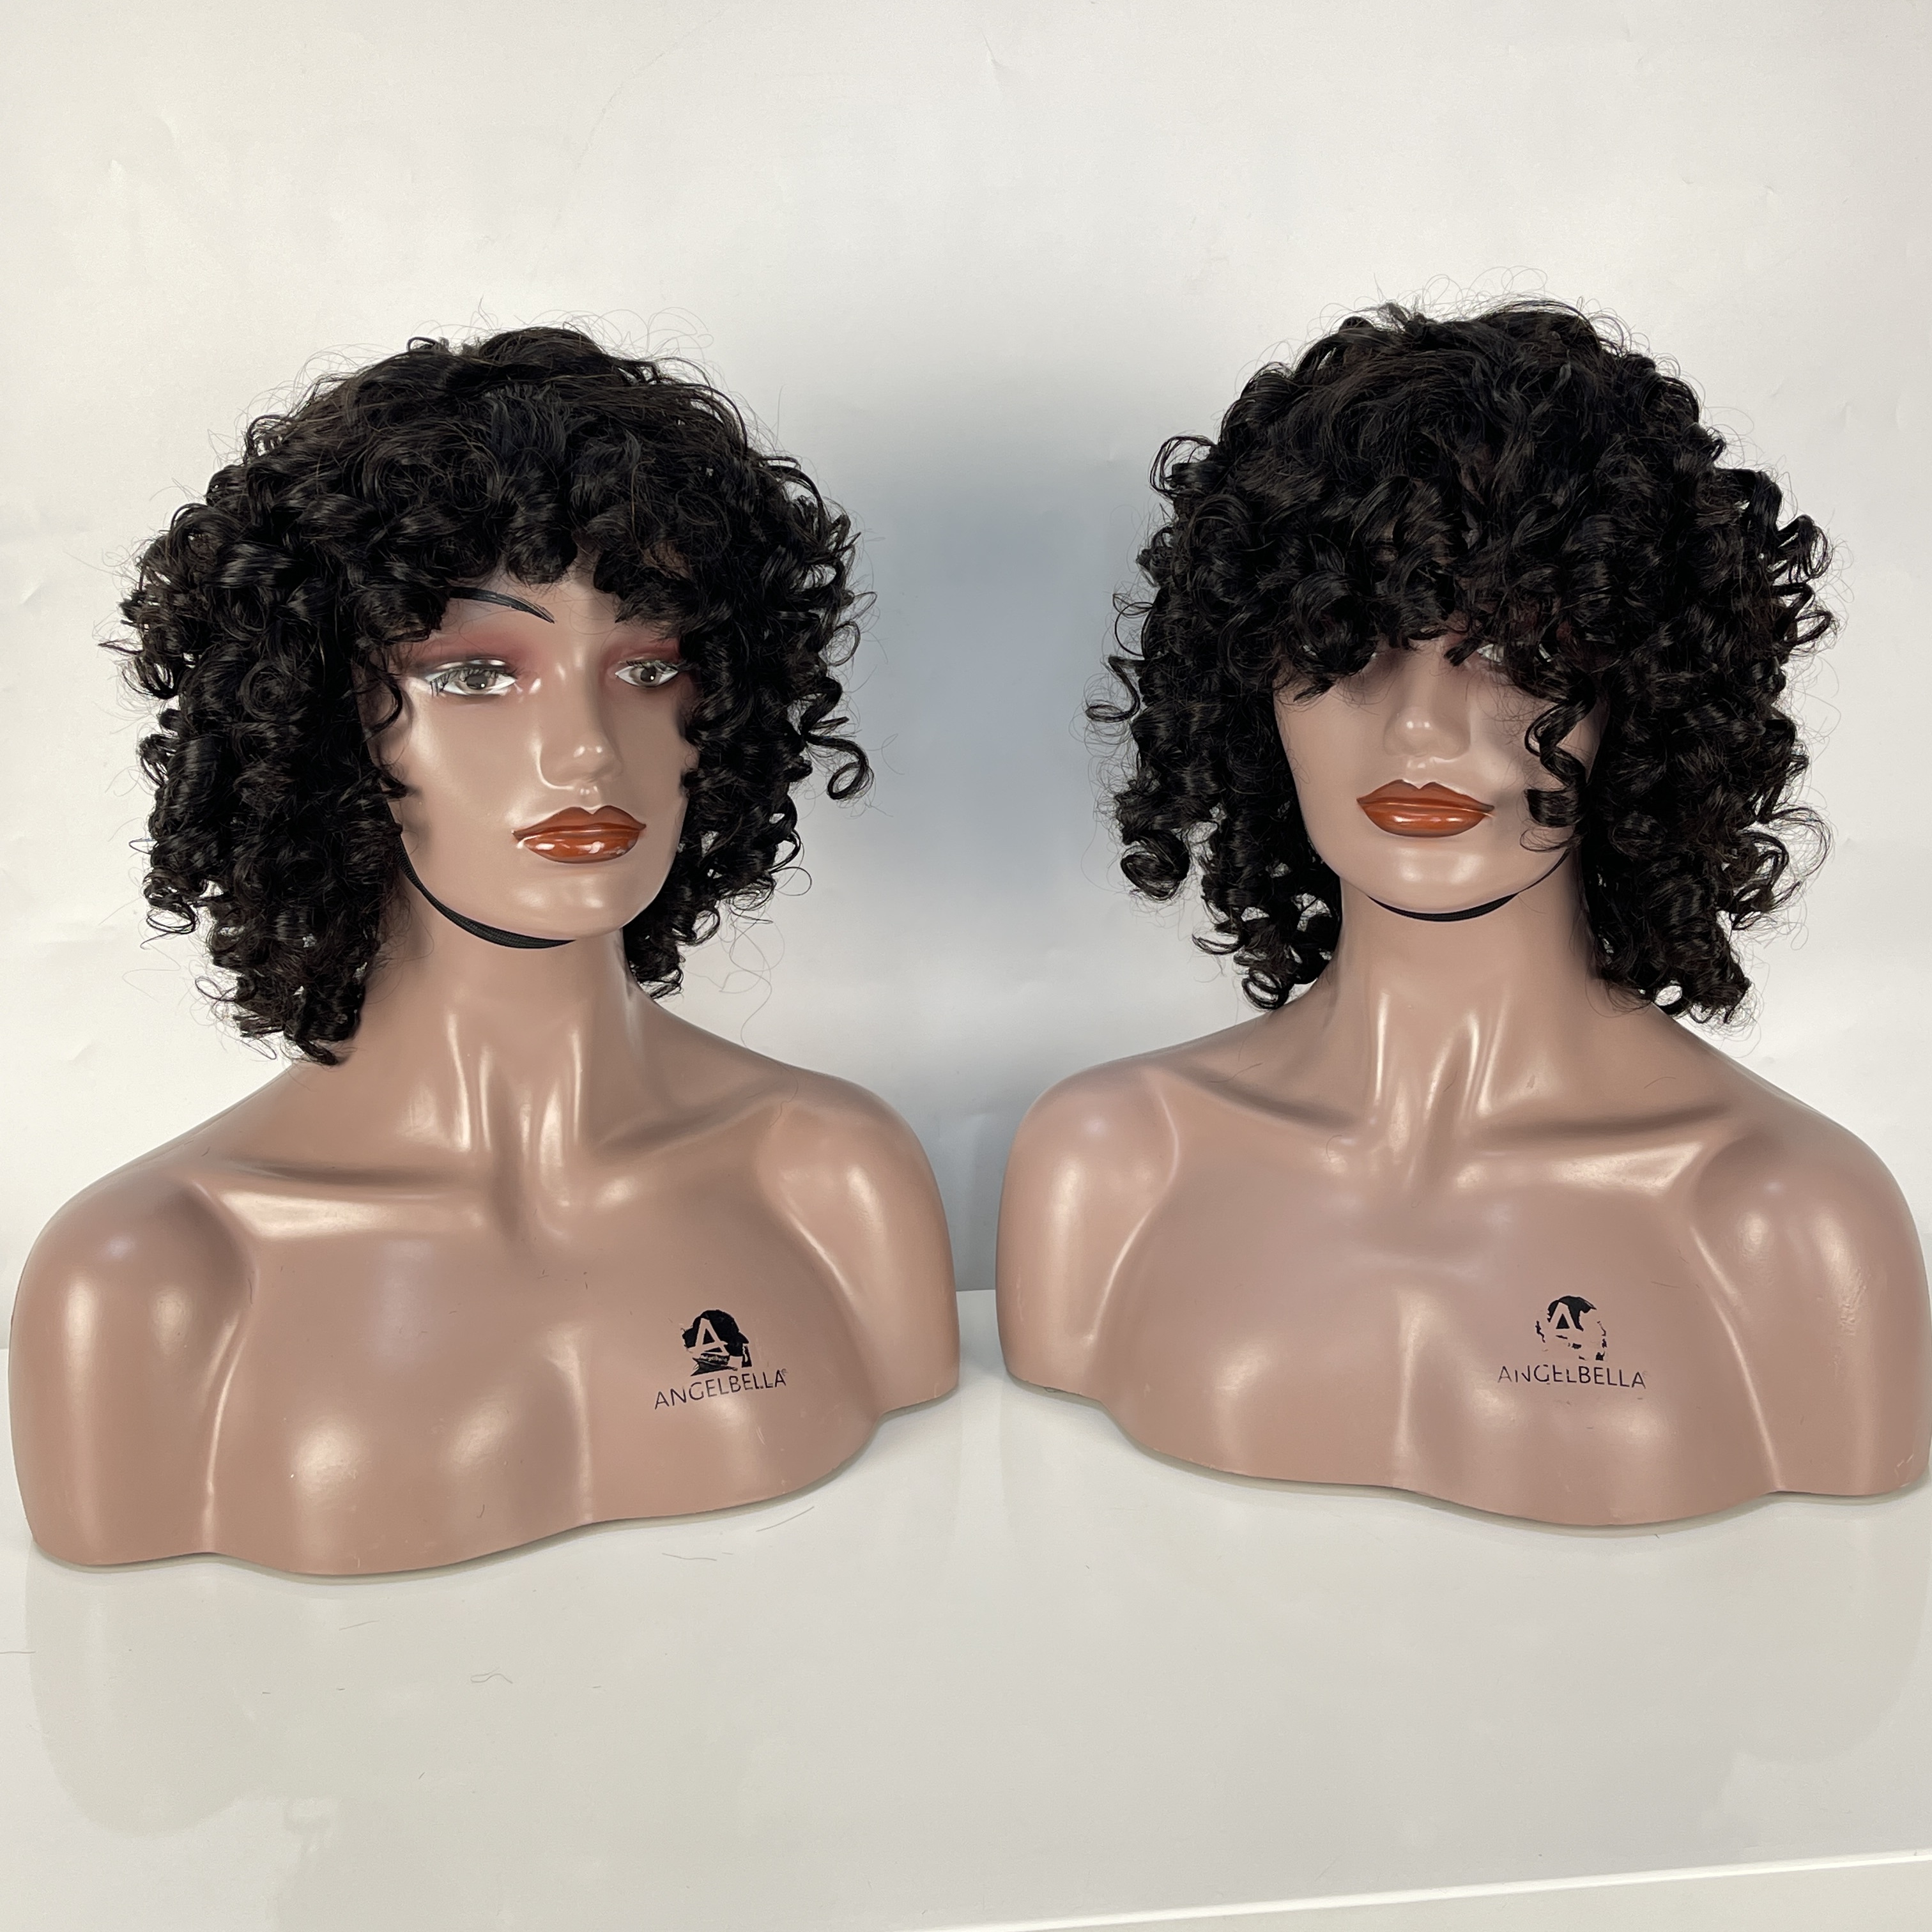 Pelucas cortas de rizado con flequillo para mujeres peluca de cabello rizado rizado